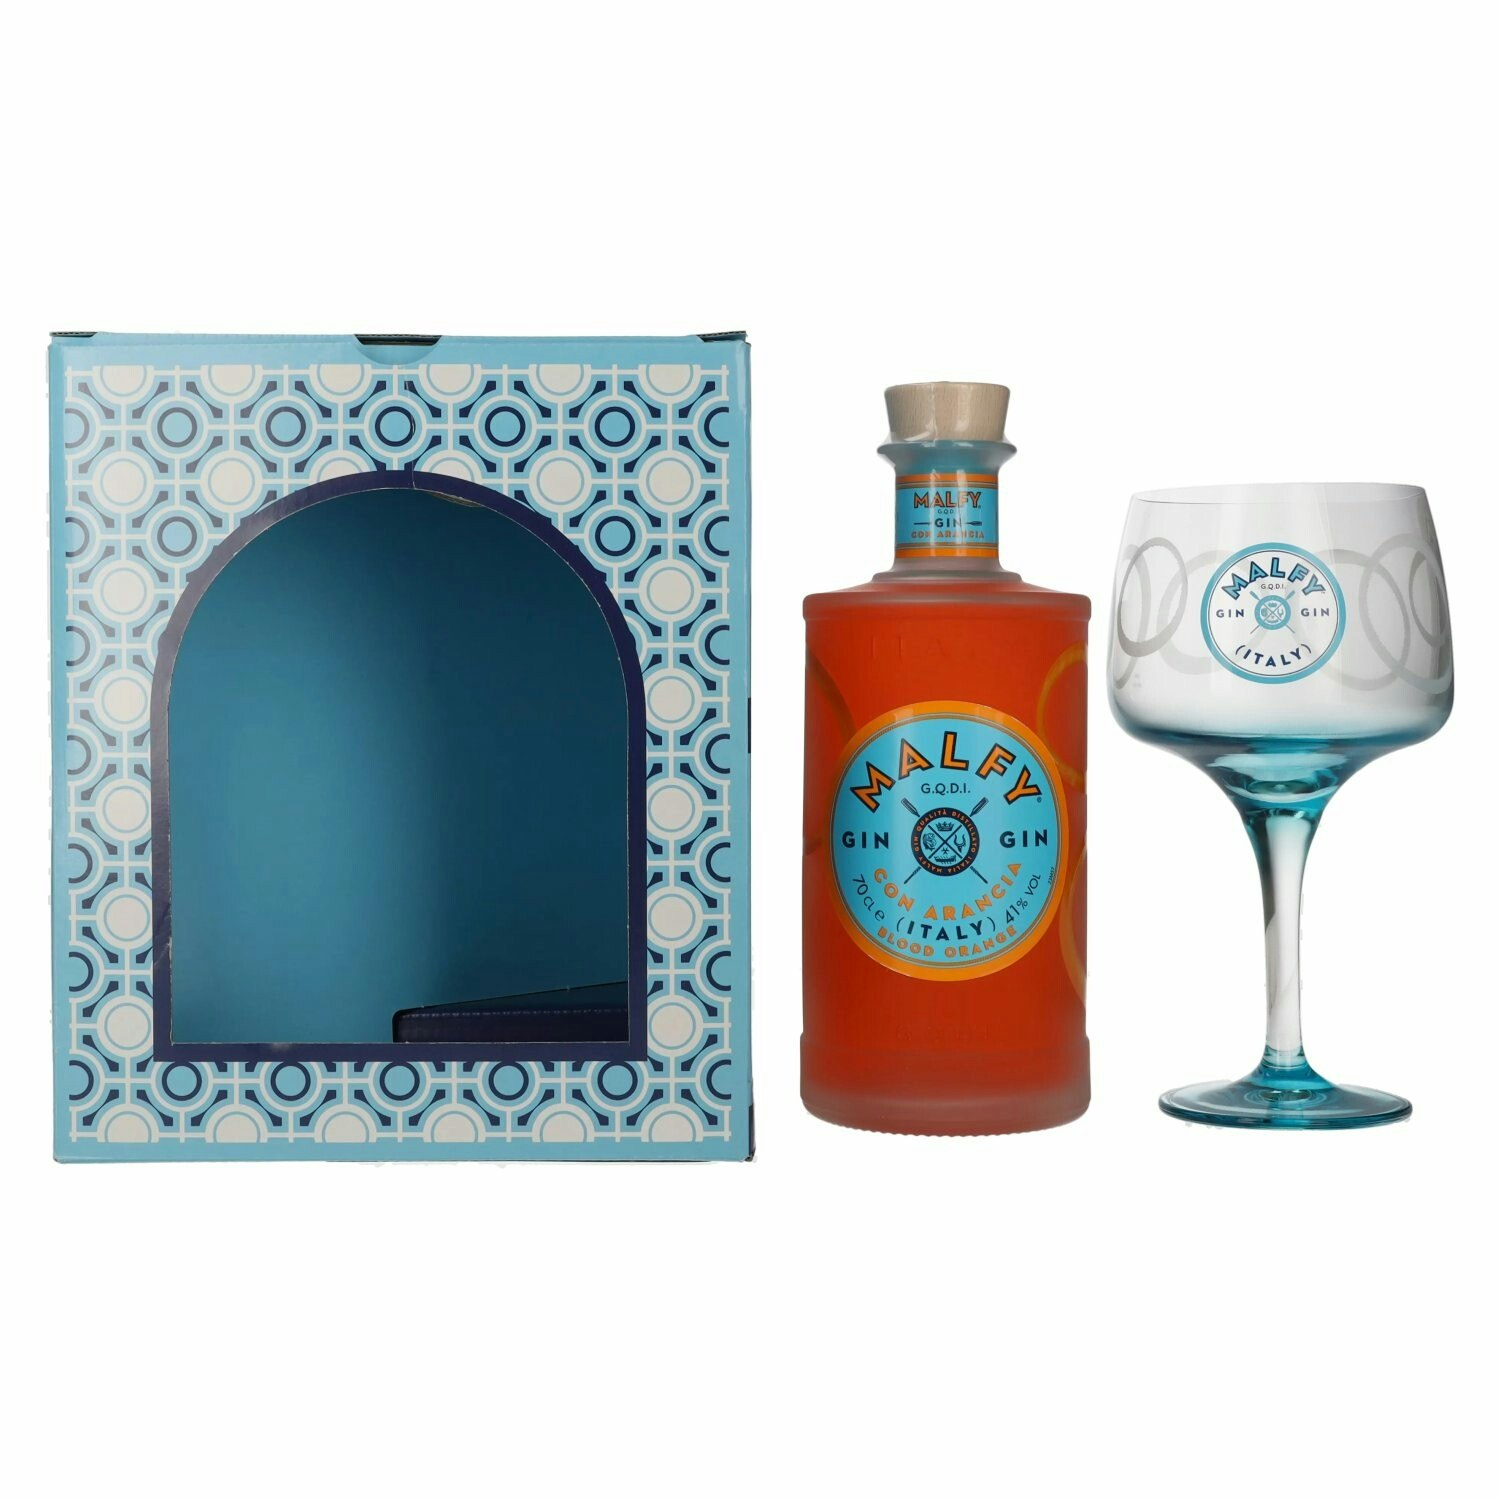 Malfy Gin CON ARANCIA Sicilian Blood Orange 41% Vol. 0,7l in Giftbox with glass